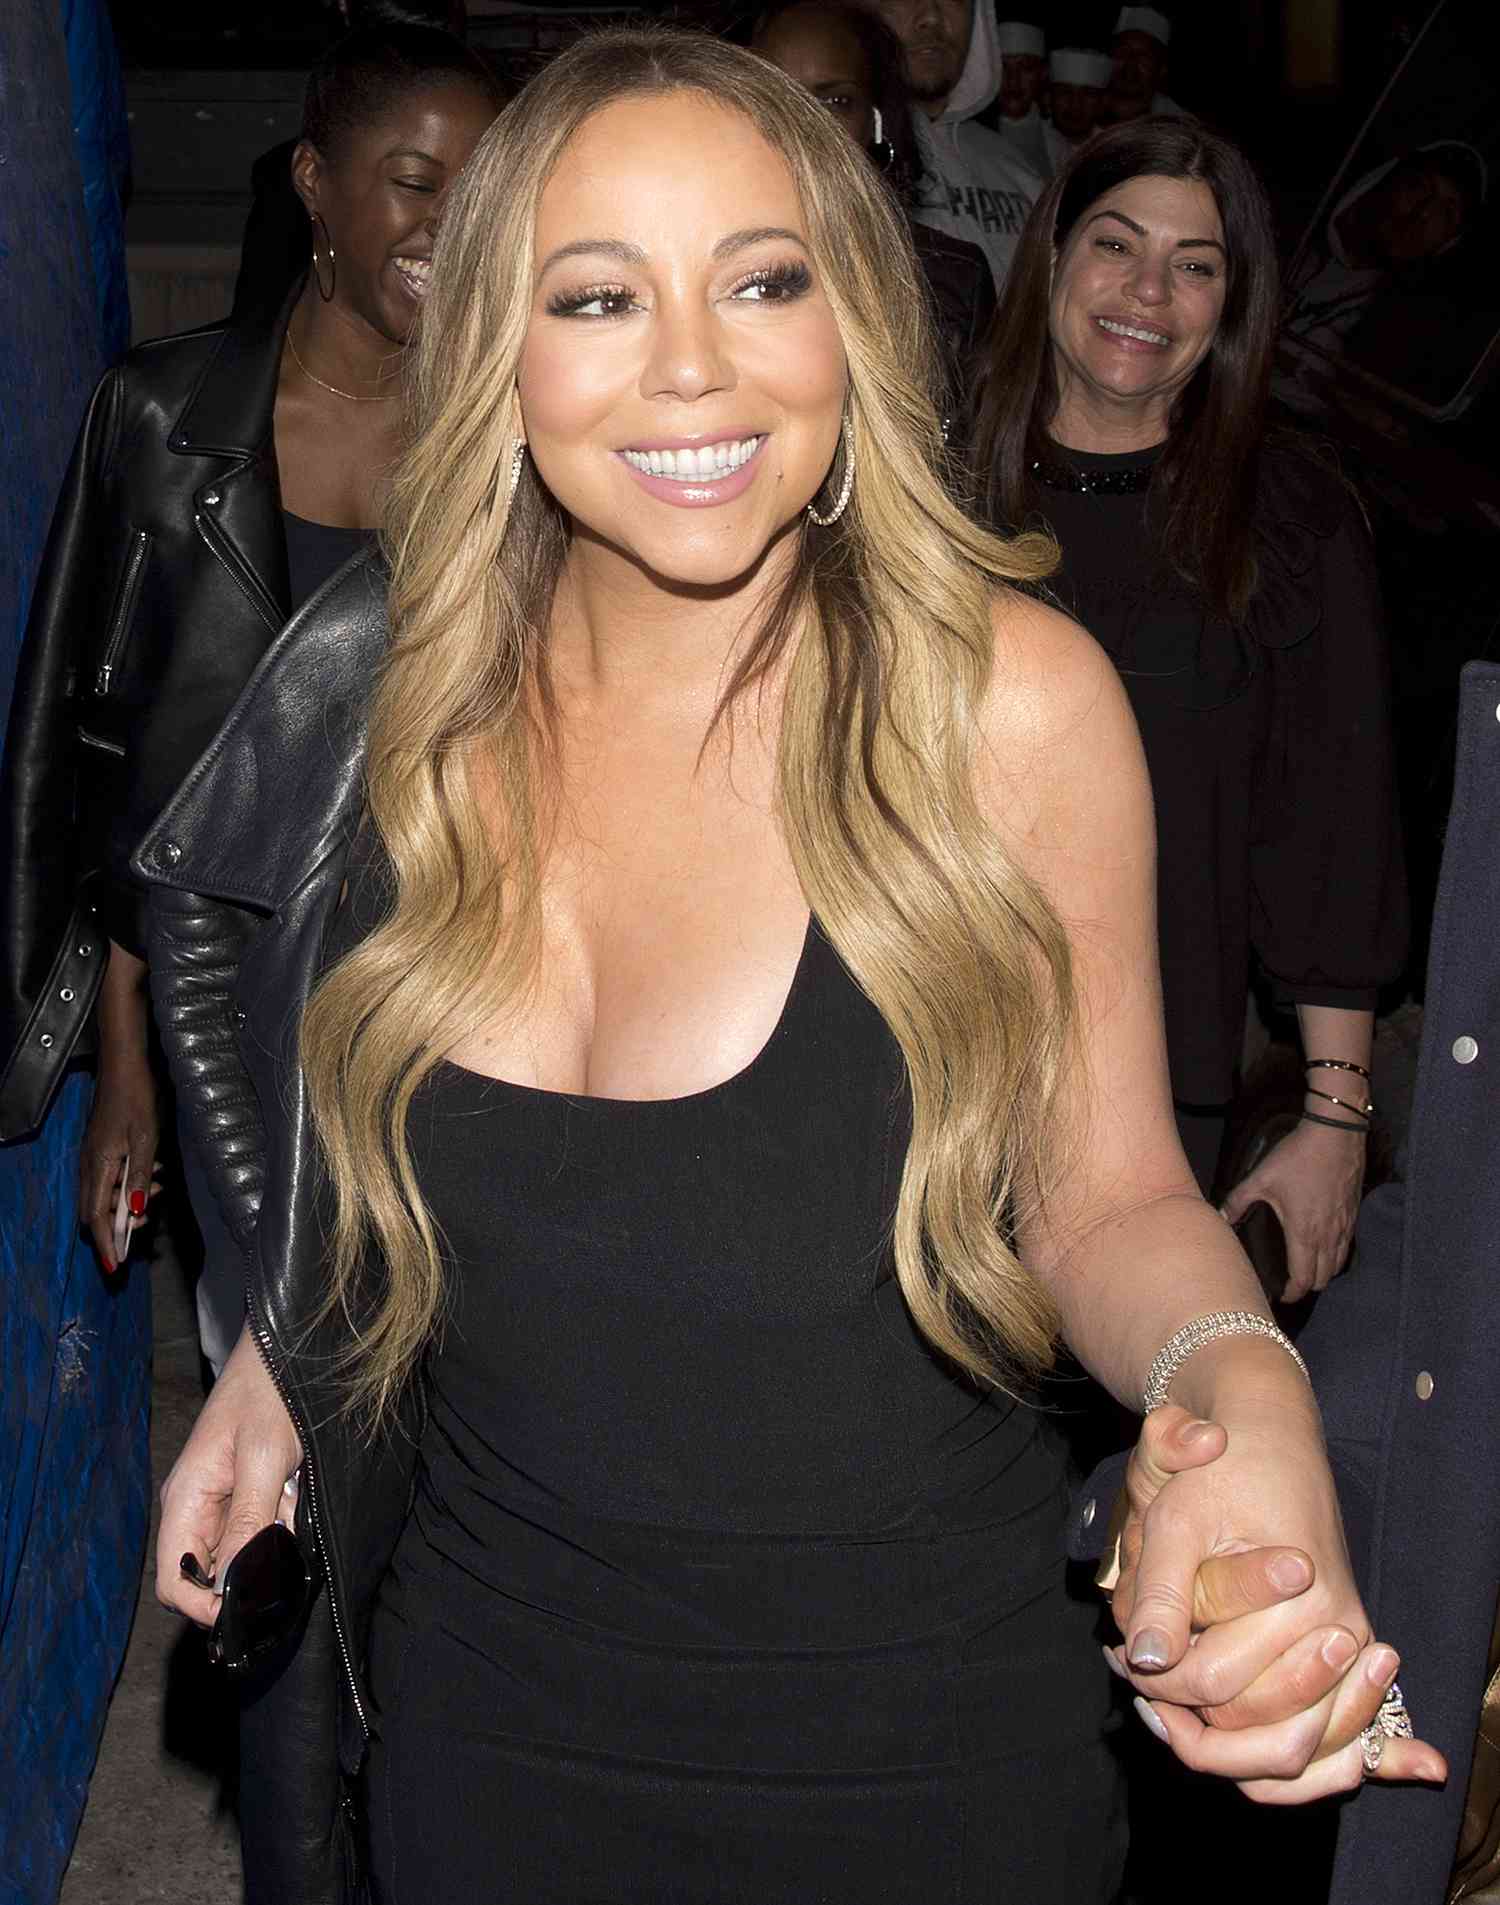 Mariah Carey celebrates her boyfriend Bryan Tanaka's 35th Birthday with friends at 'Mastro's Steak House' in Beverly Hills, CA